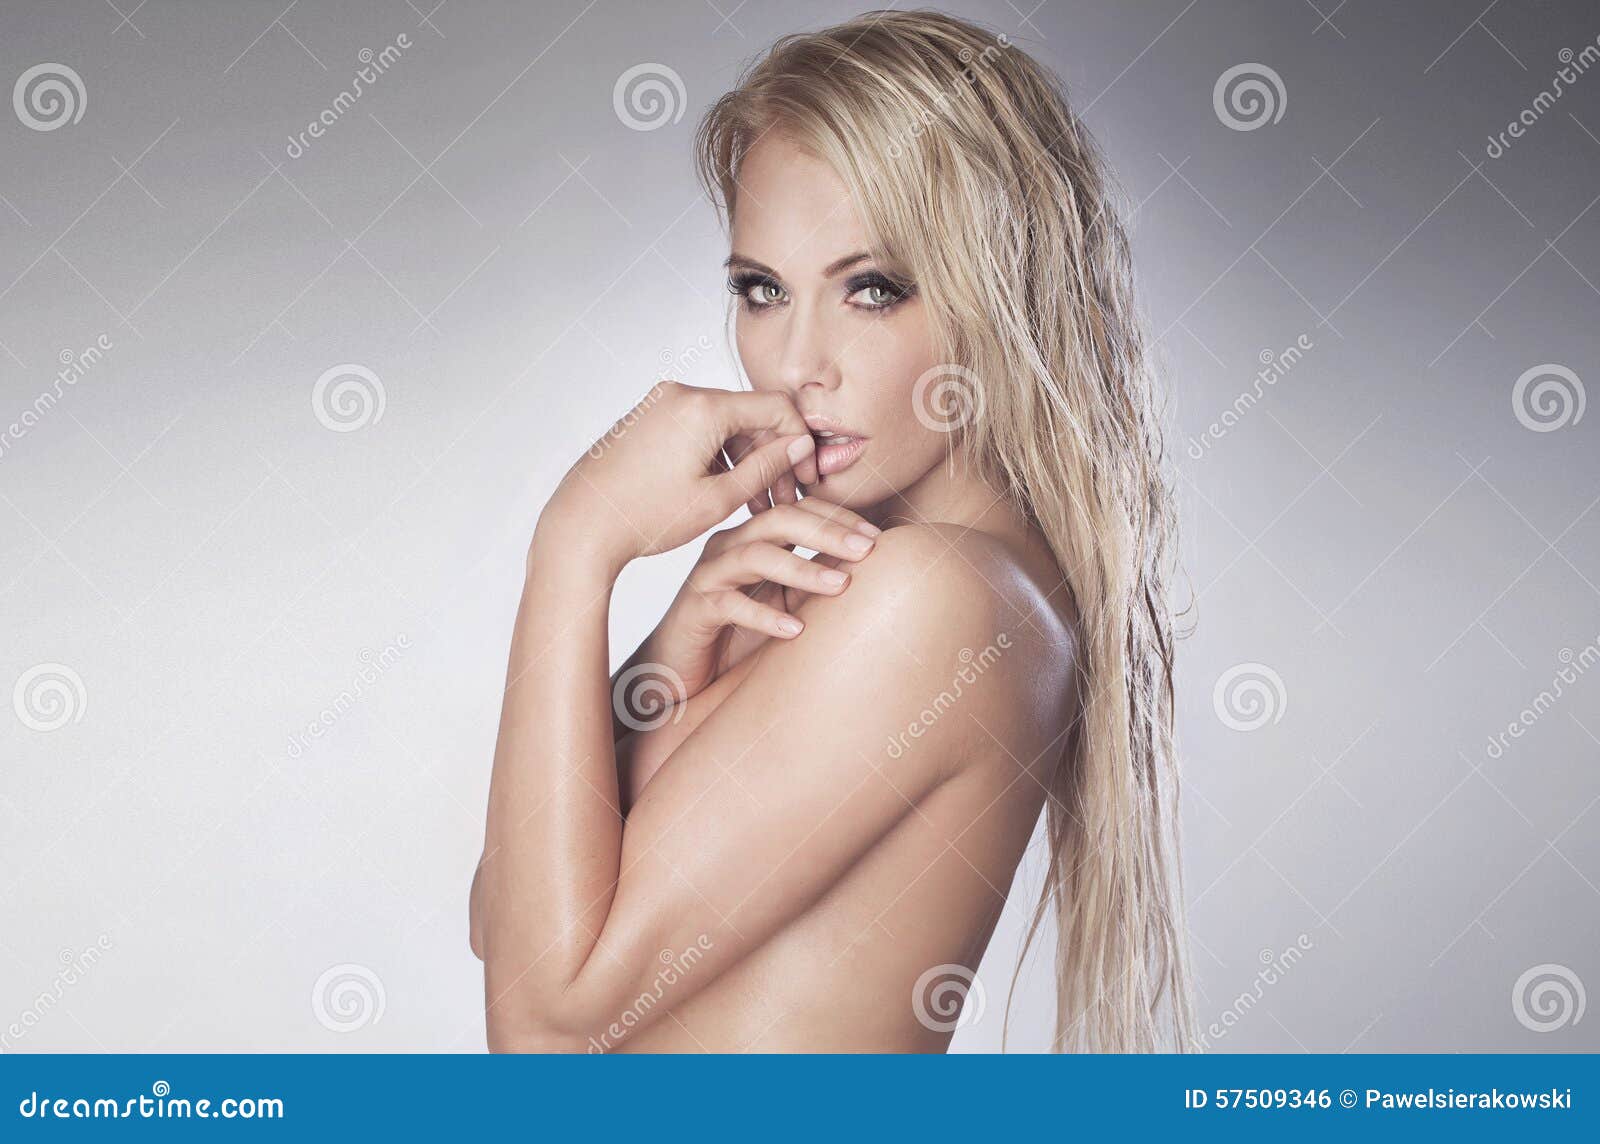 brad hirsch recommends Blonde Hair Girls Naked